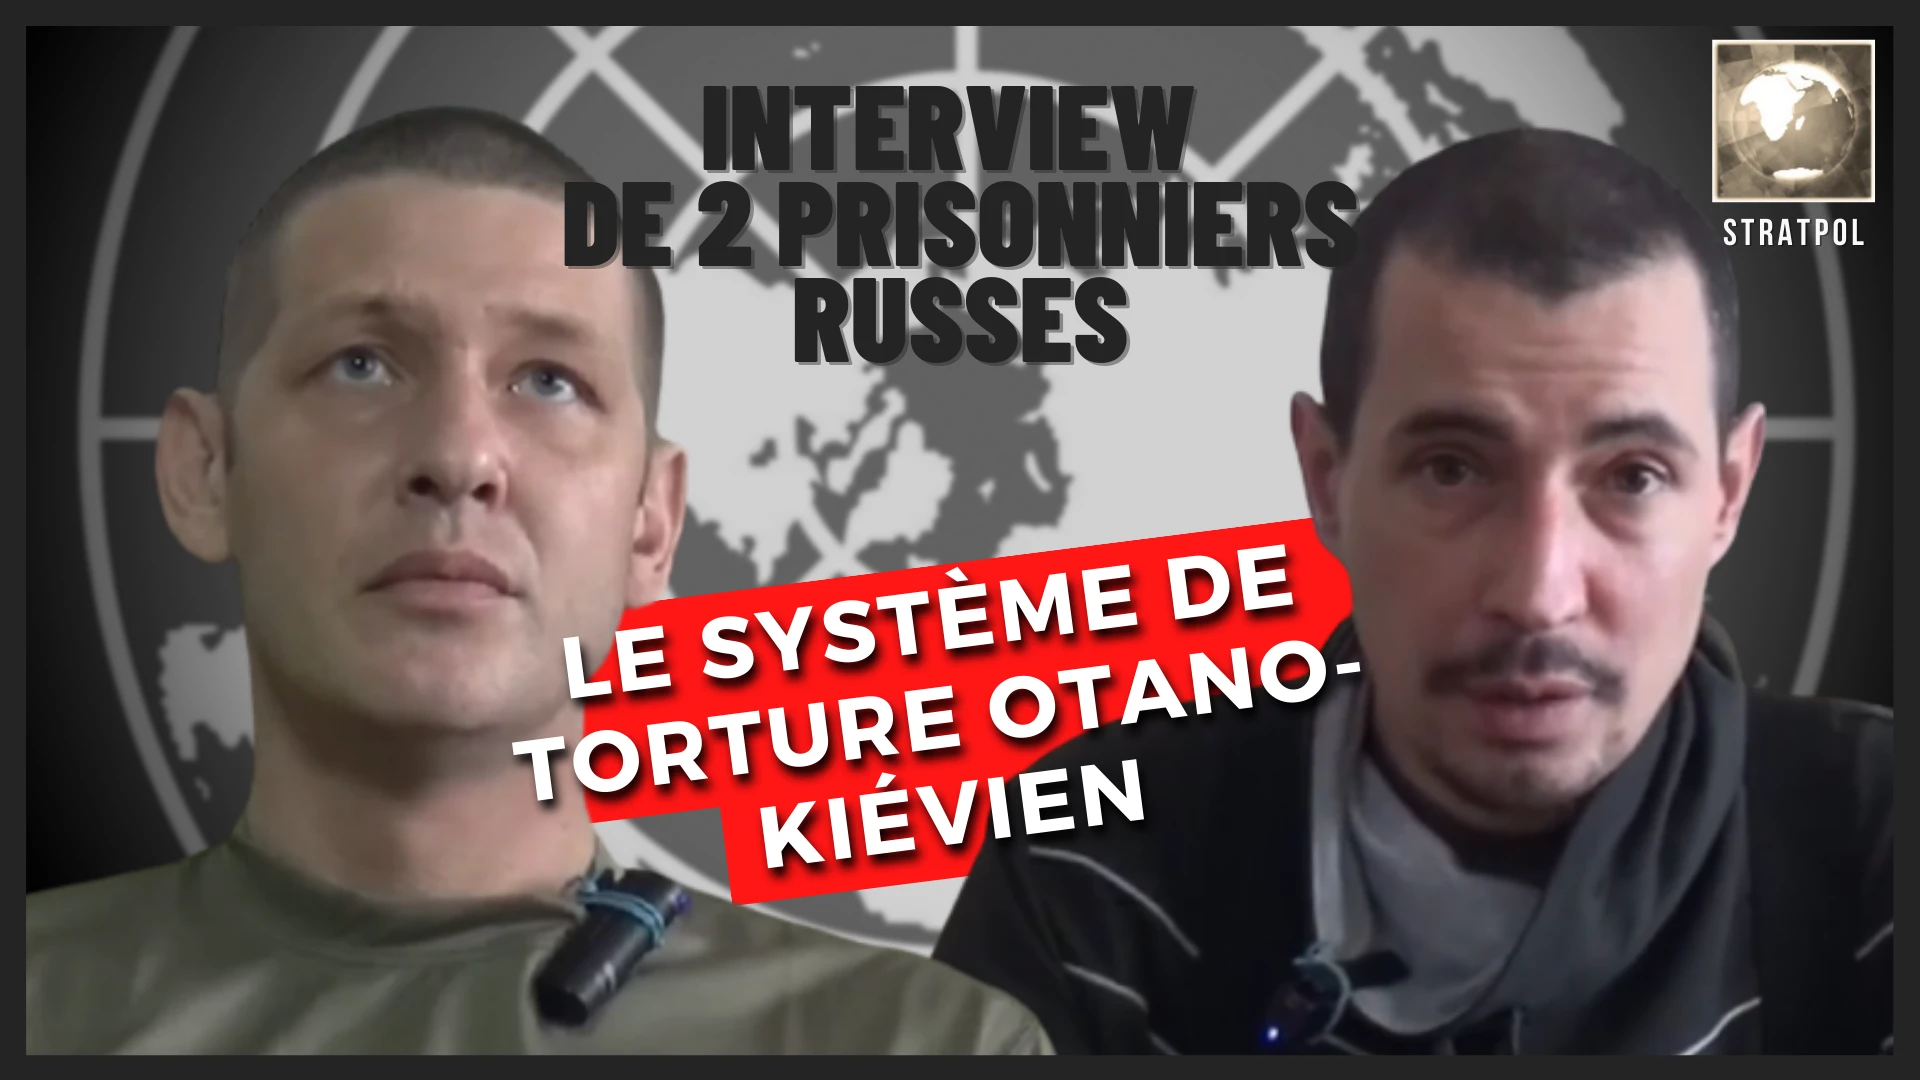 Le système de torture otano-kiévien/Нато-киевская система пыток.08.02.2023.